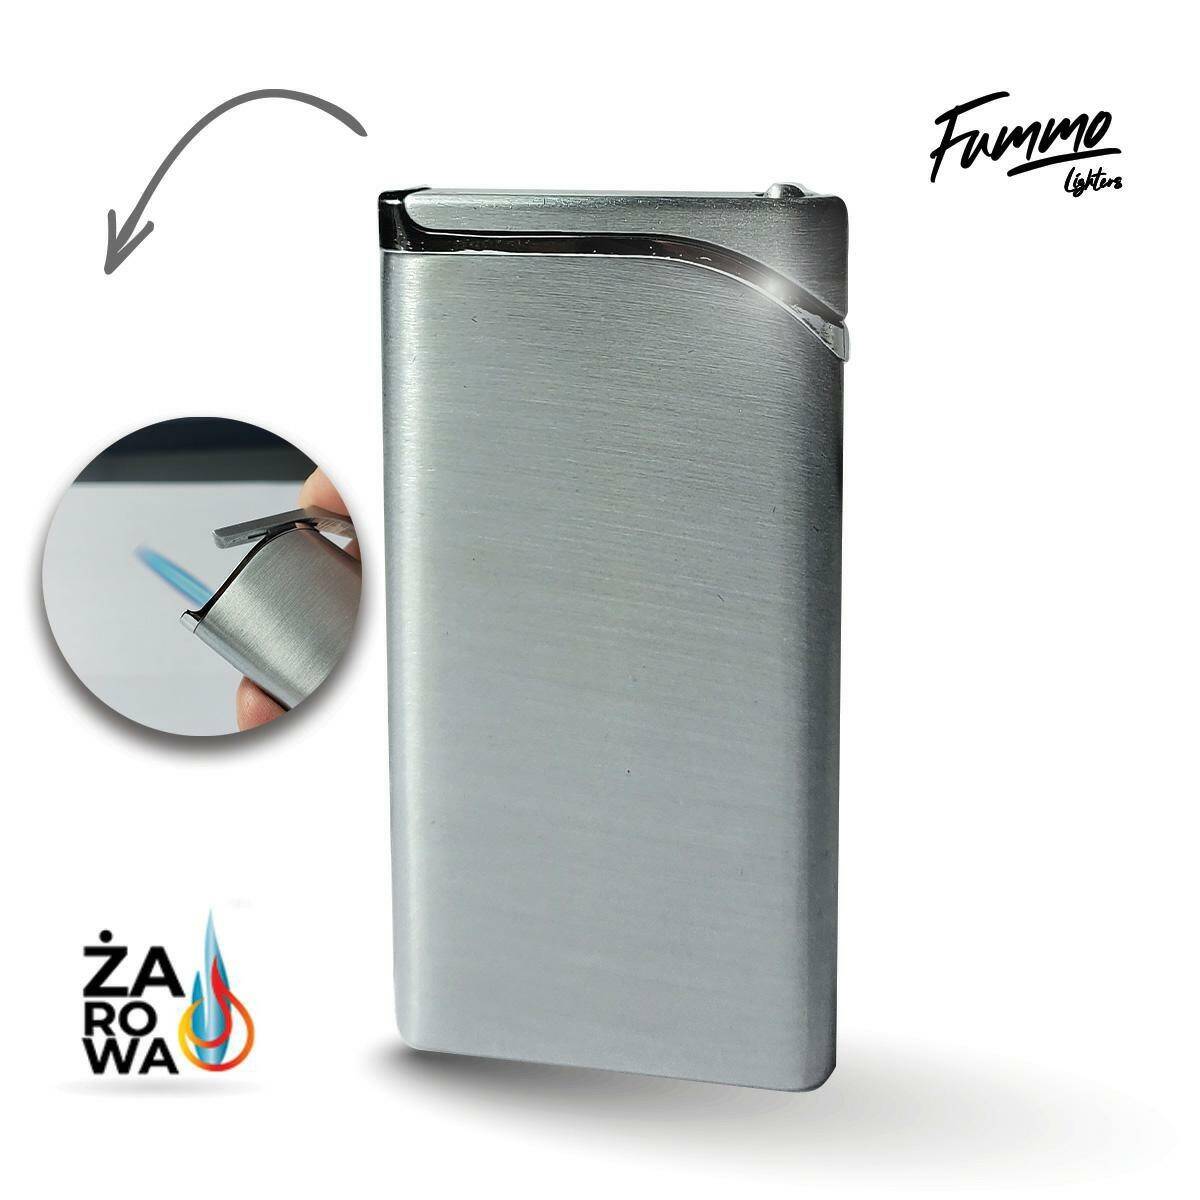 Lighter Fummo Toora - Silver